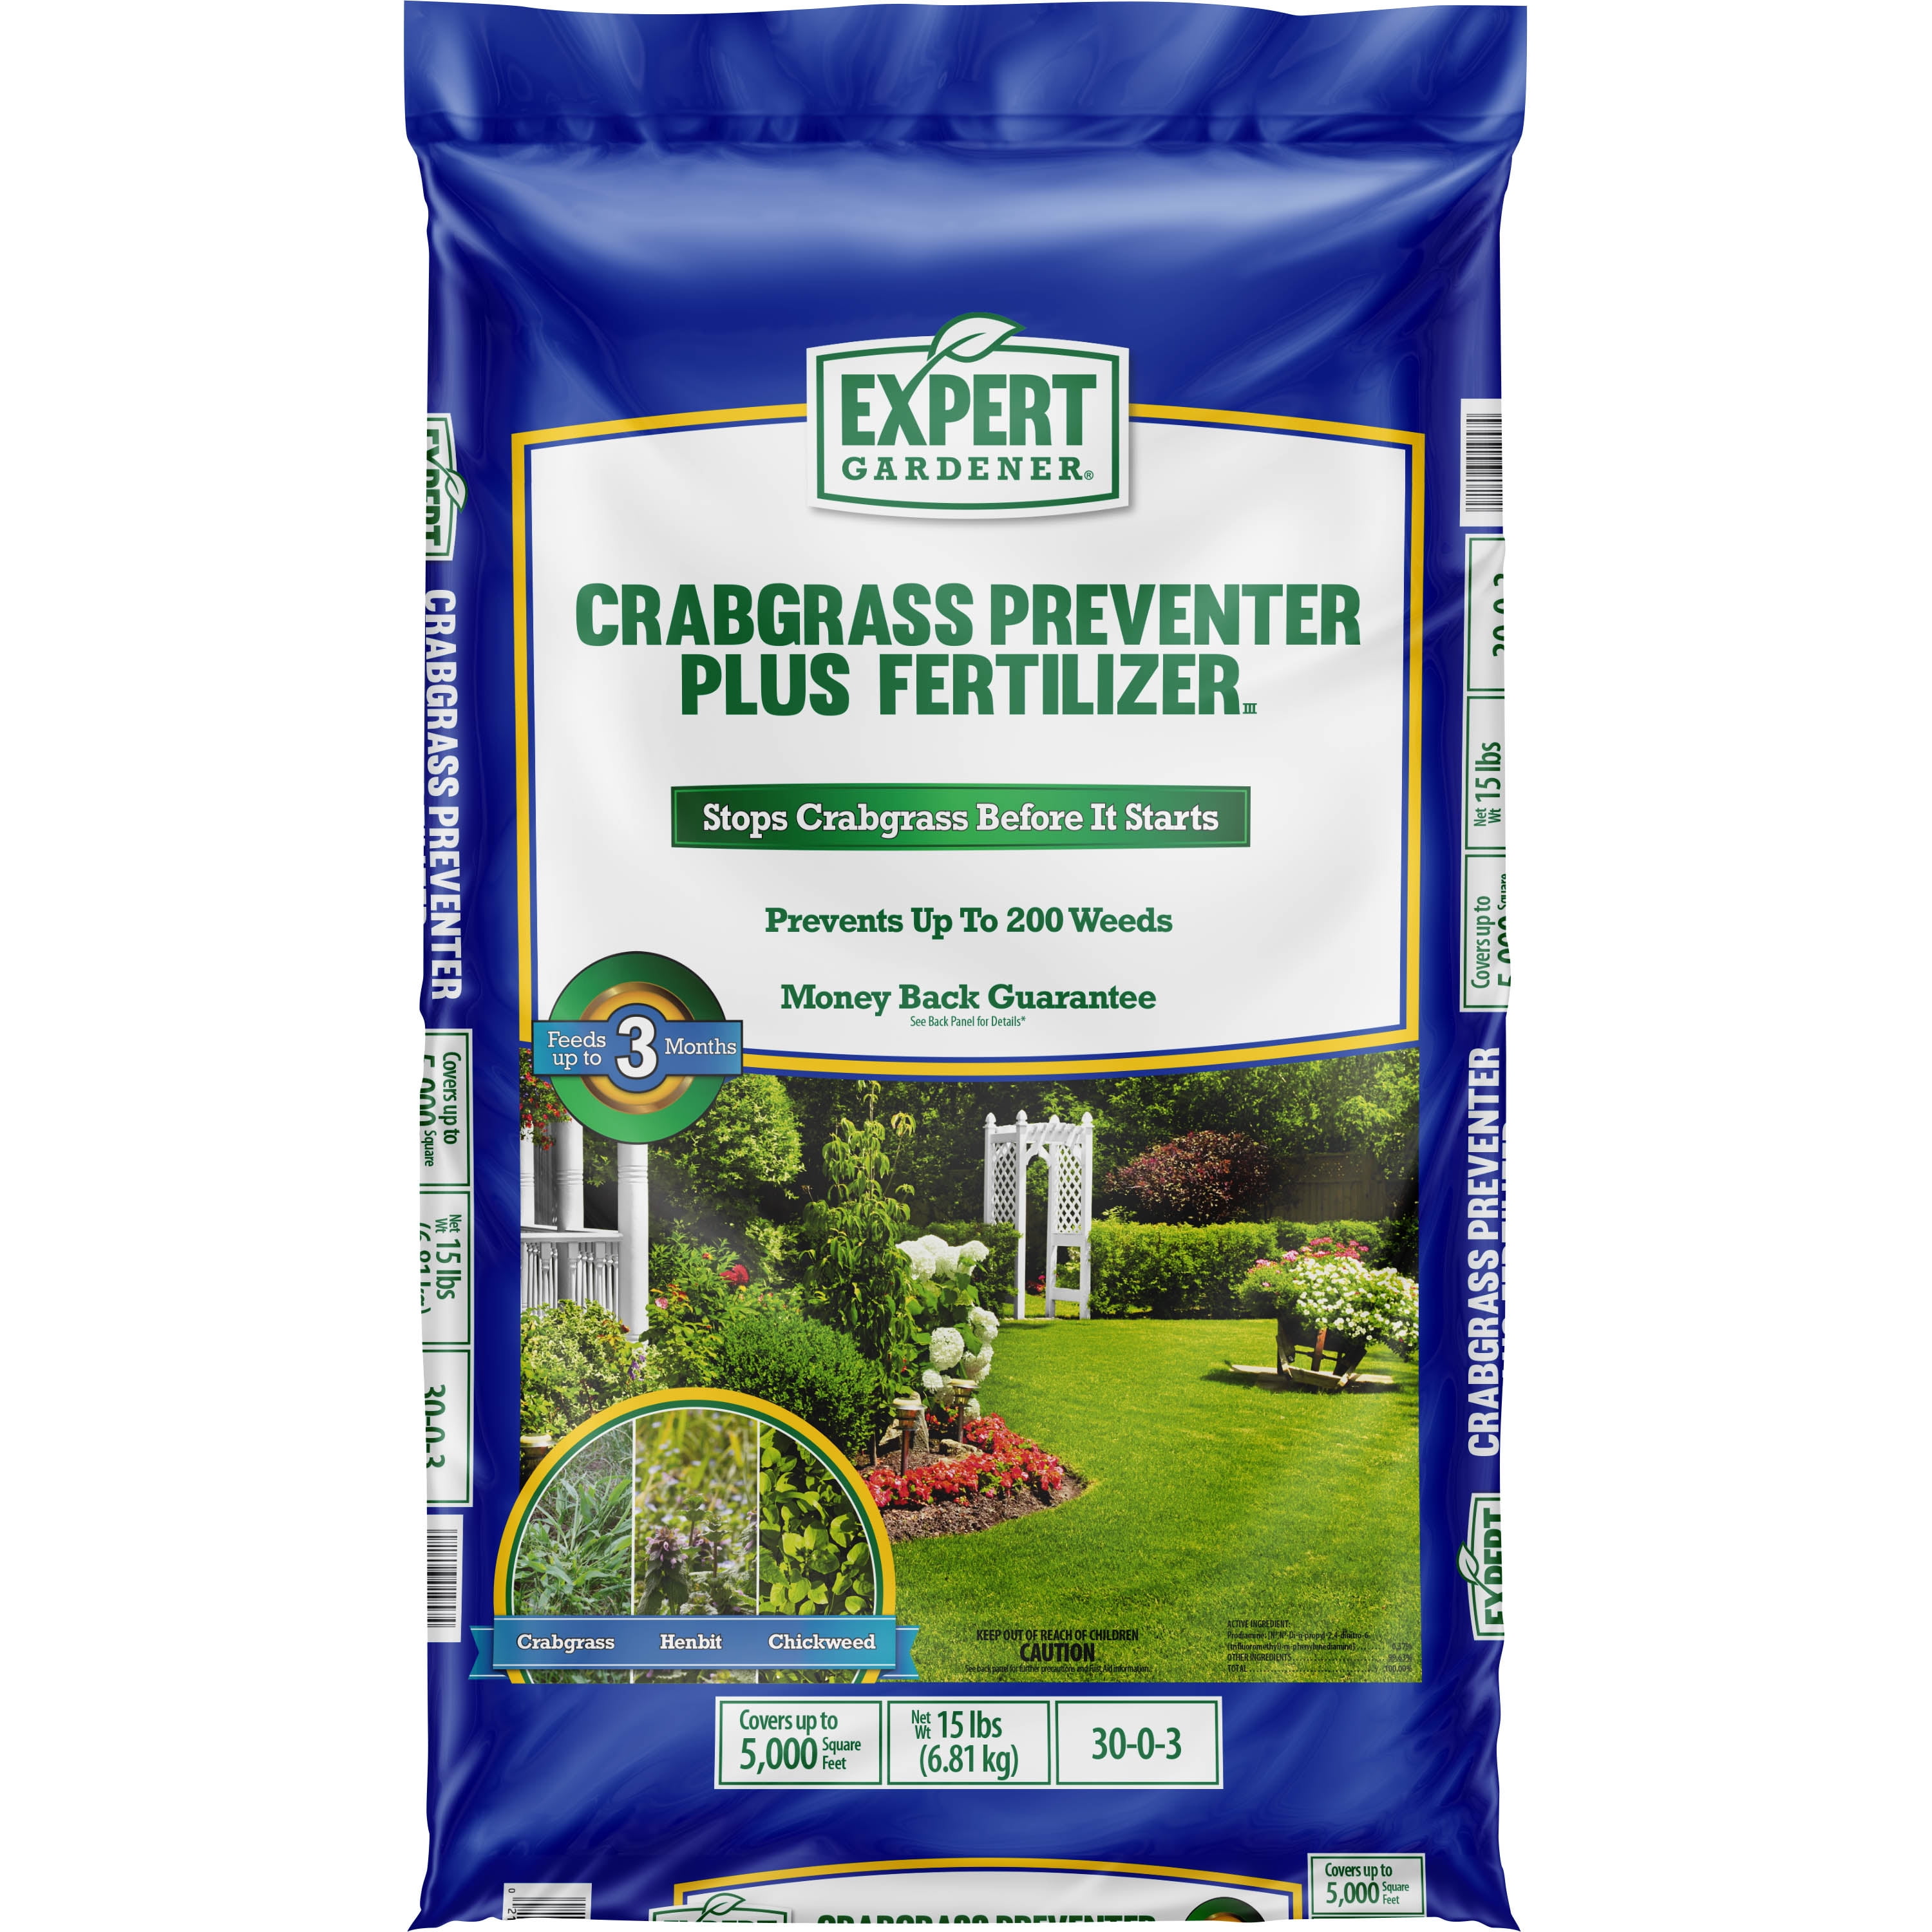 Expert Gardener Crabgrass Preventer Plus Fertilizer, Covers up to 5,000